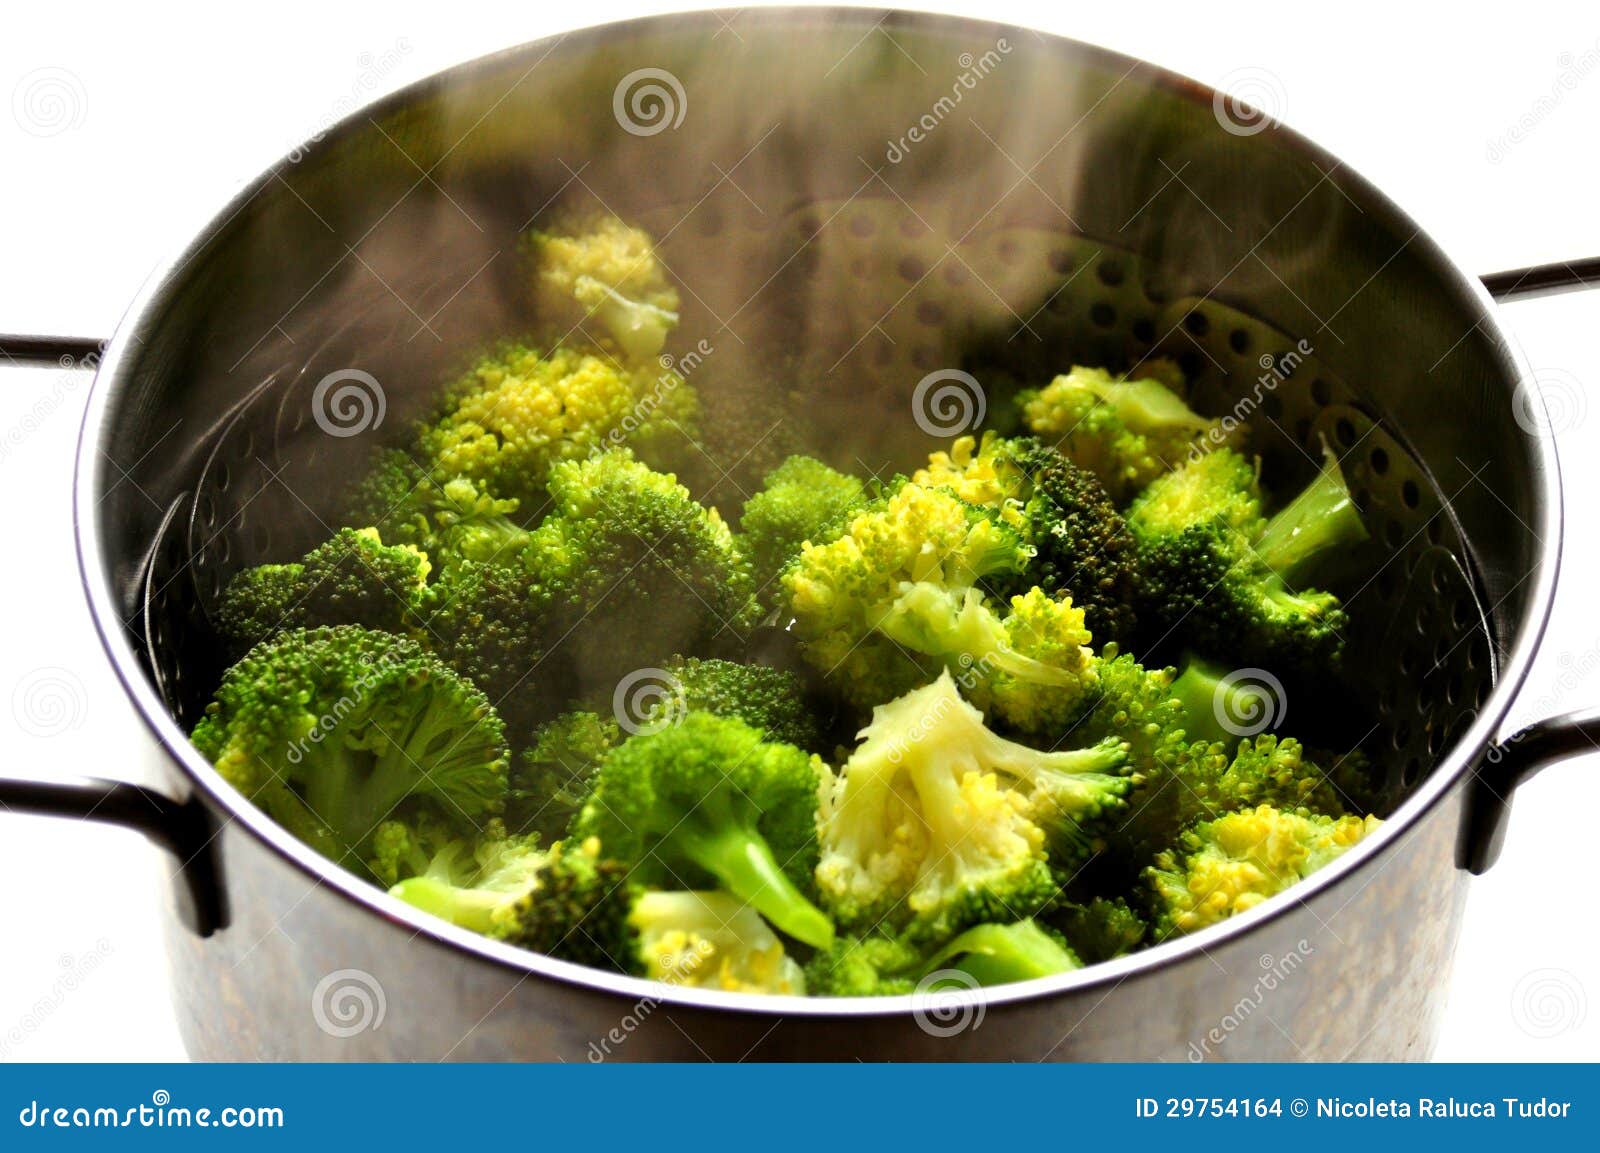 vegan food : steaming broccoli in an inox pot